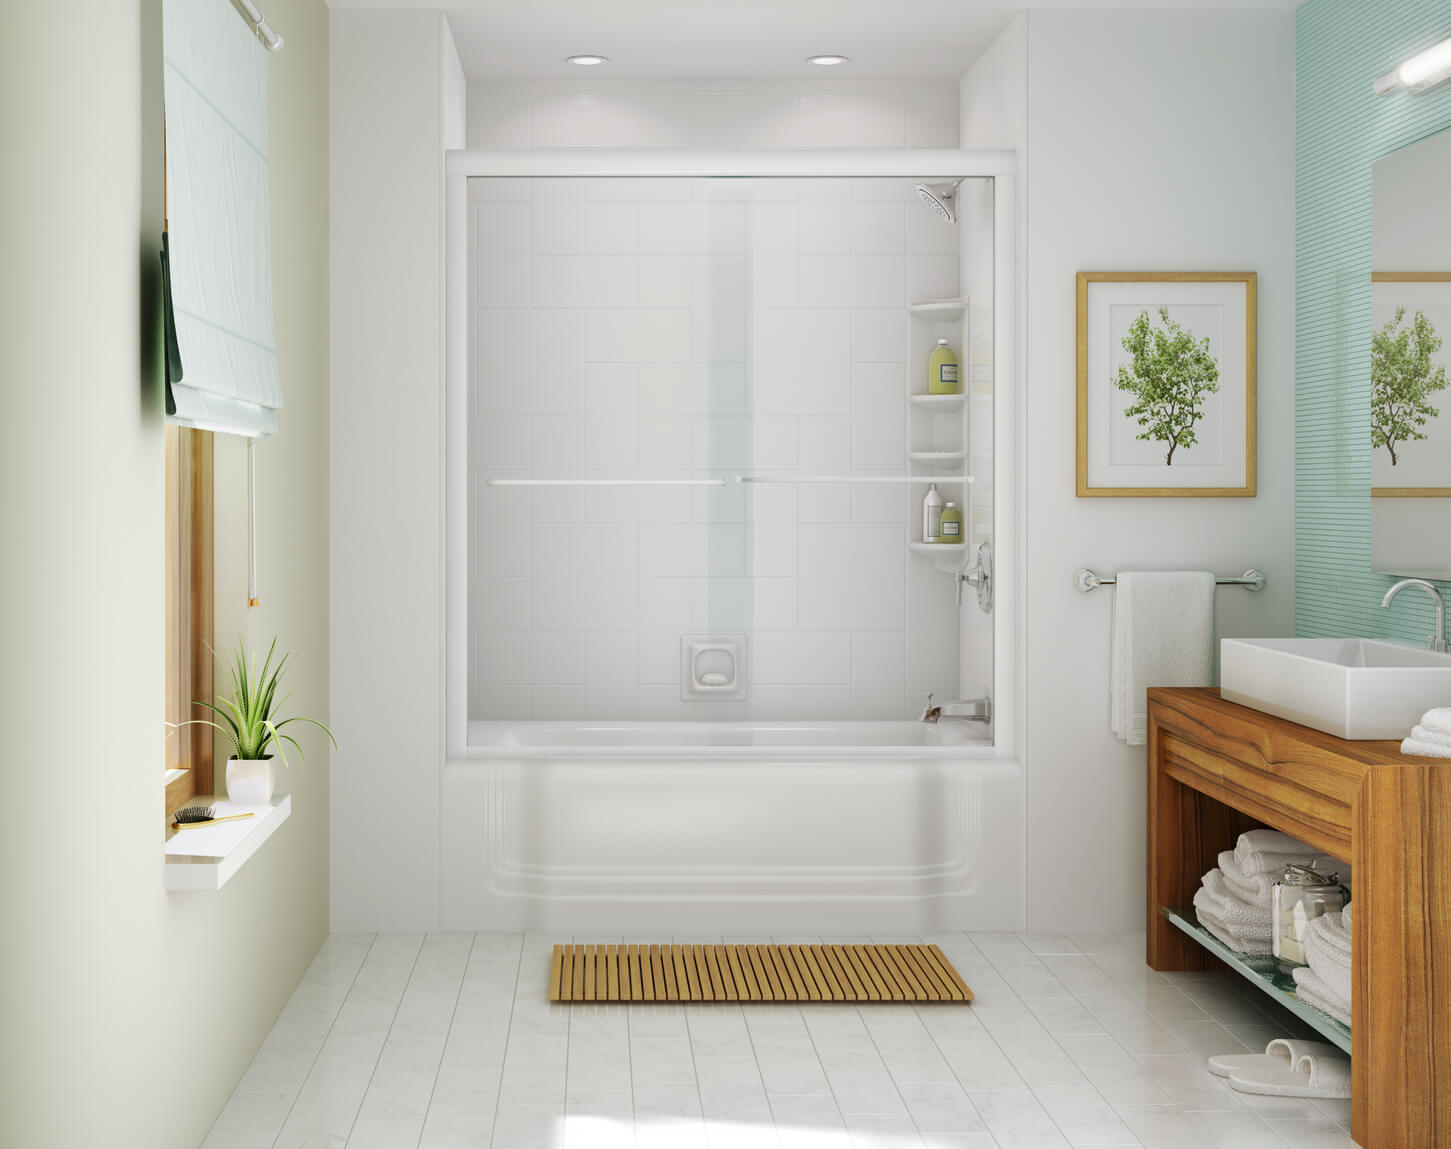 Top 5 Master Bathroom Design Trends for 2022 - Bath Fitter